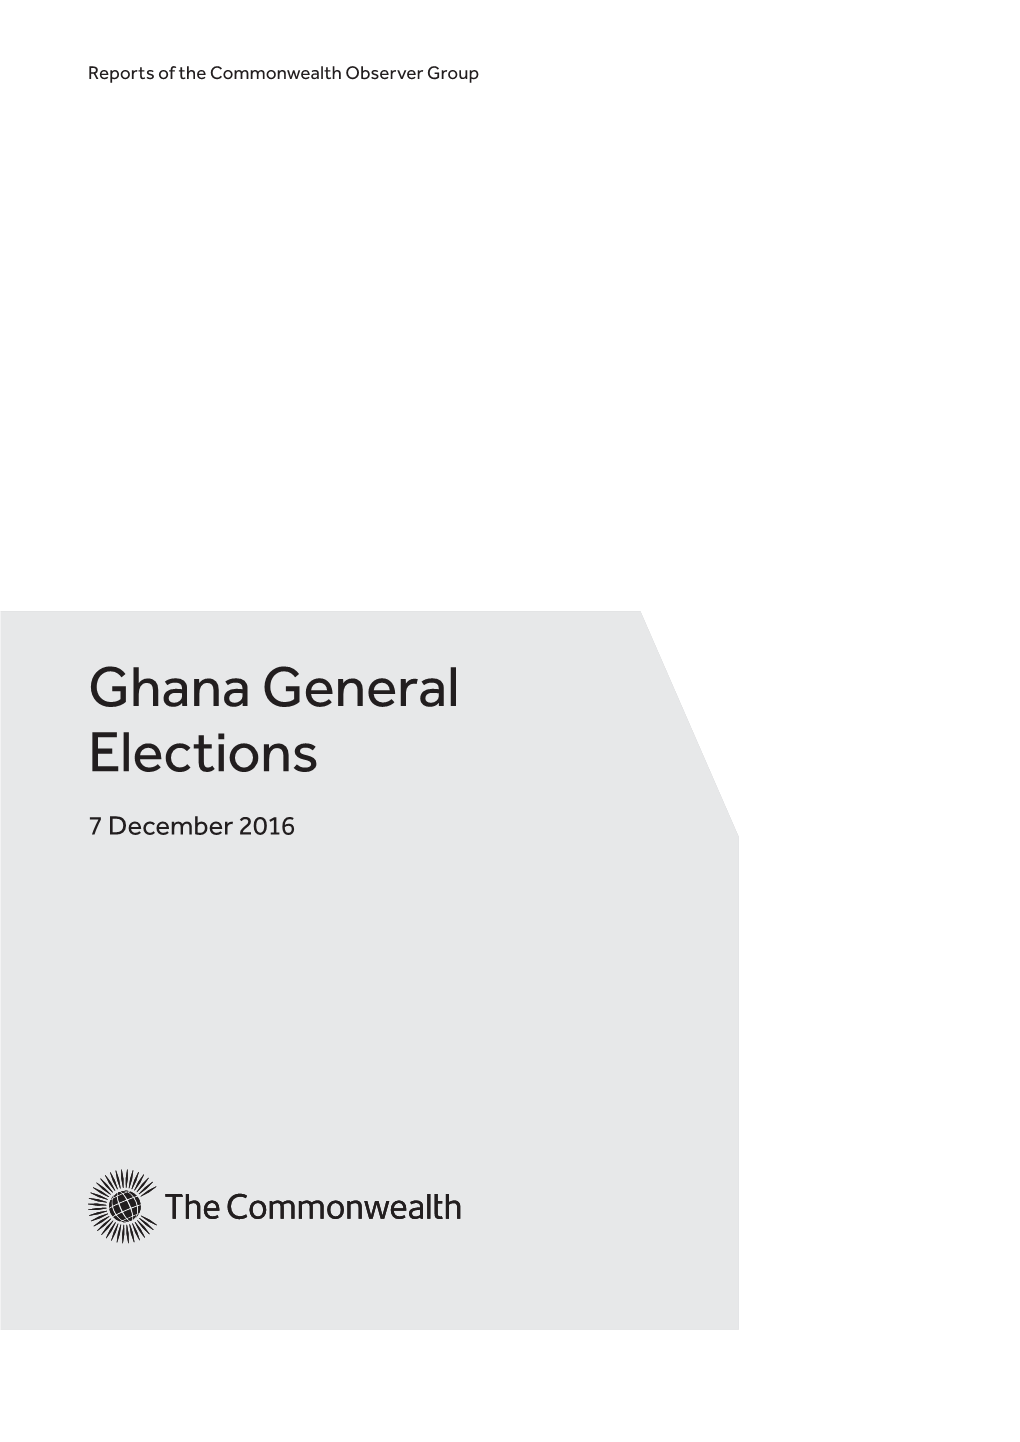 Ghana General Elections